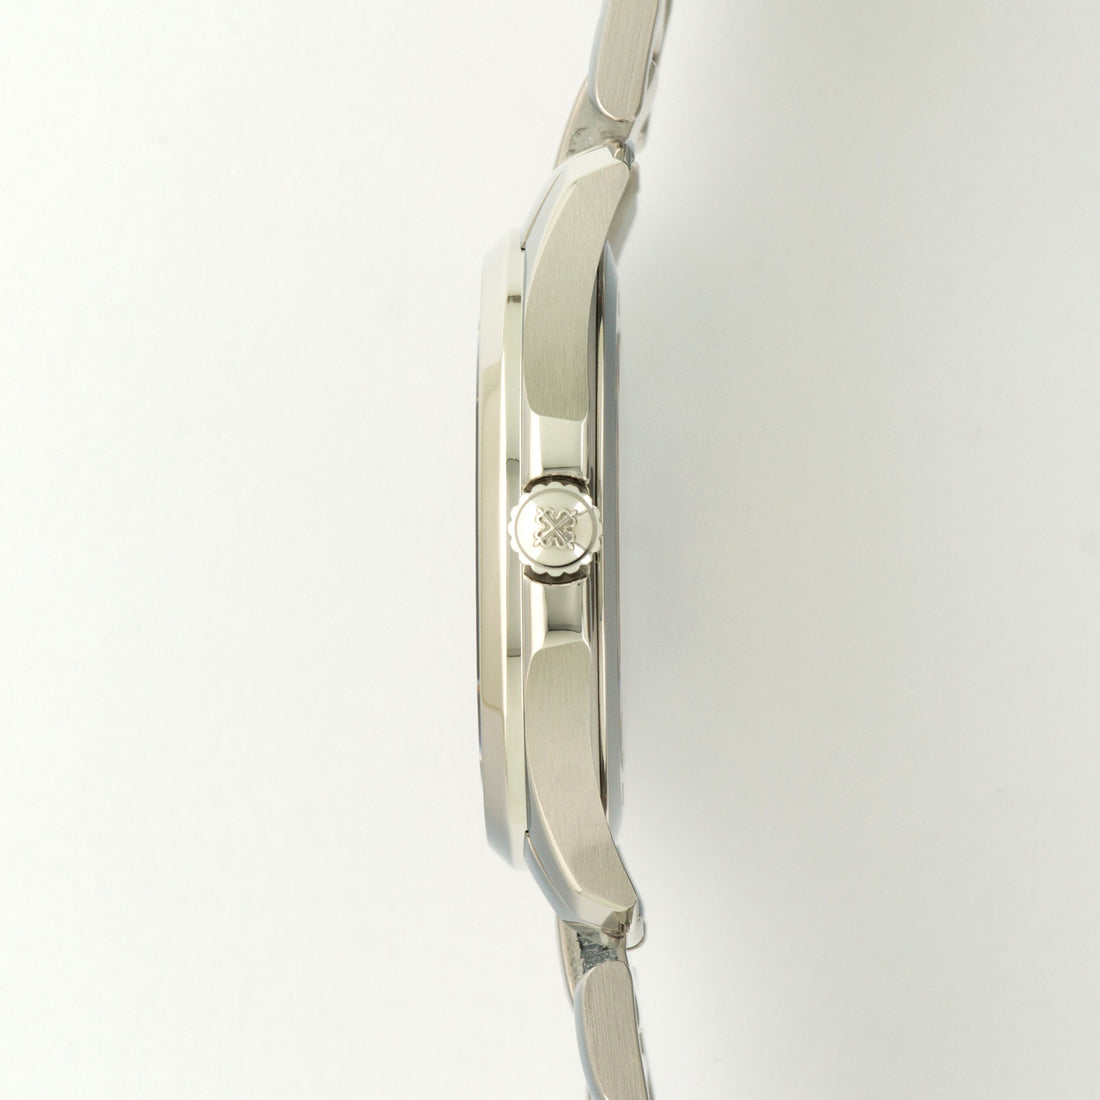 Patek Philippe Aquanaut Tiffany & Co Watch Ref. 5167